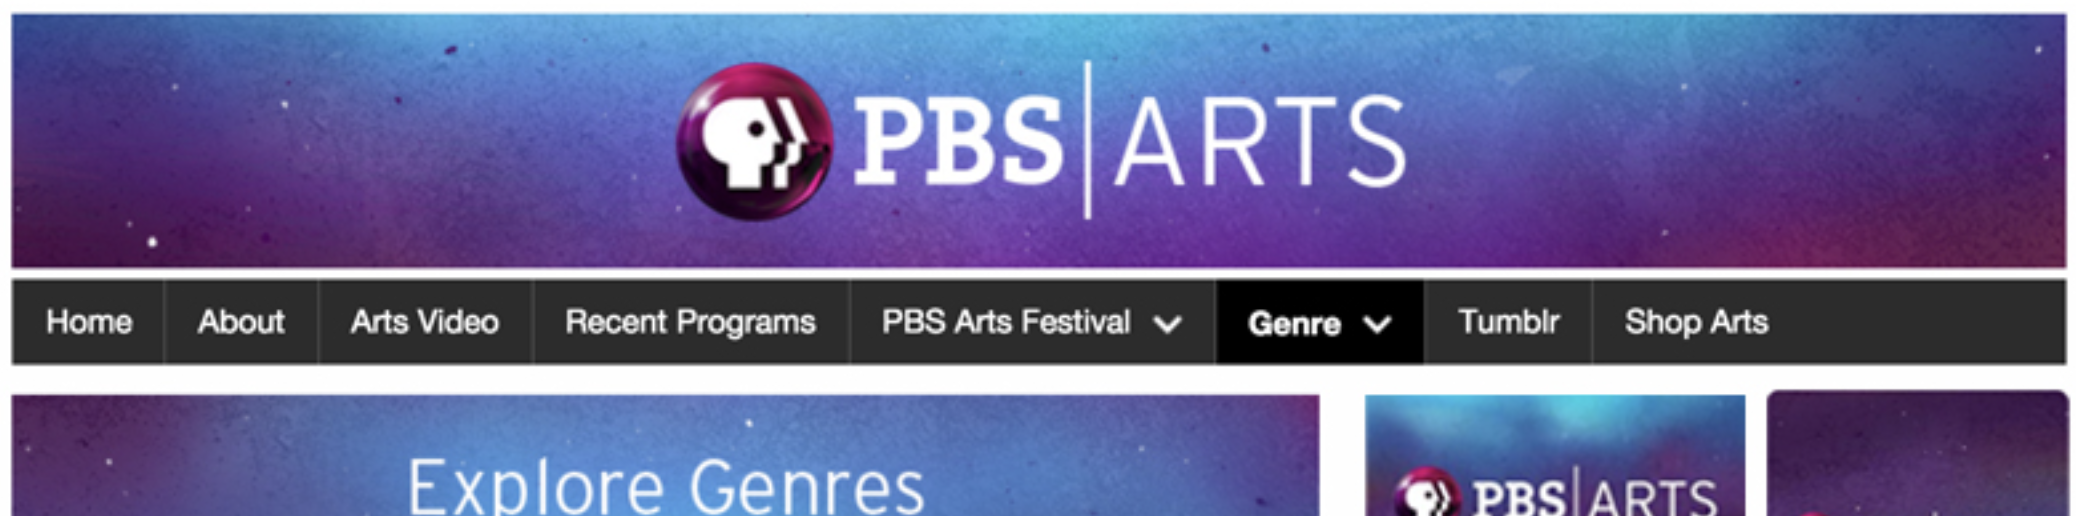 PBS Arts brand & site refresh